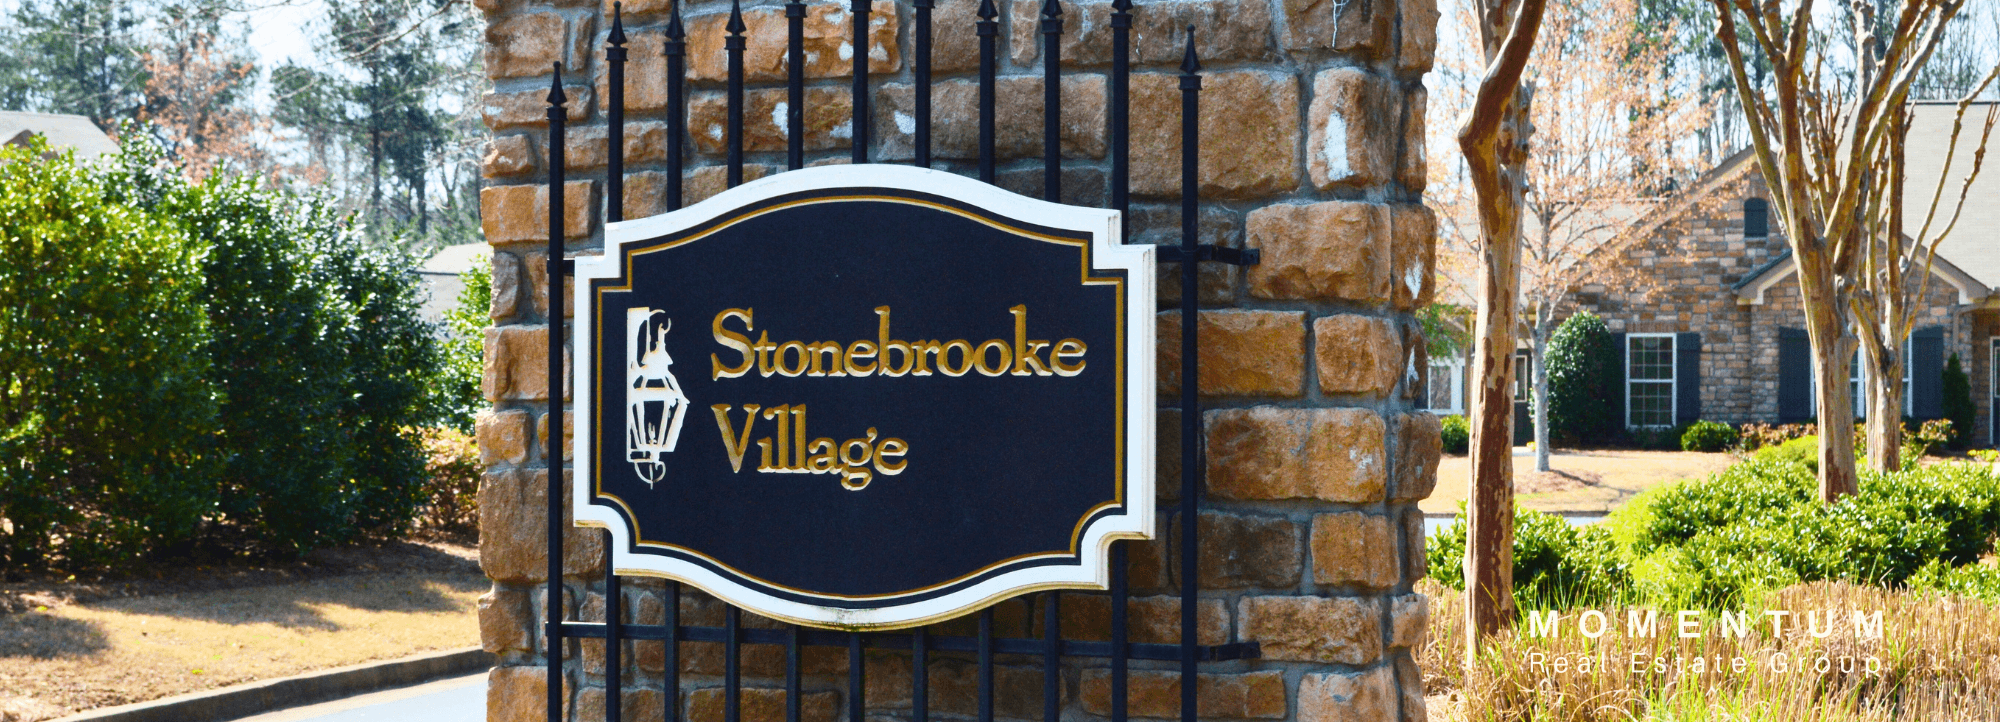 Stonebrooke Village Retirement Community Kennesaw GA Momentum Real Estate Group